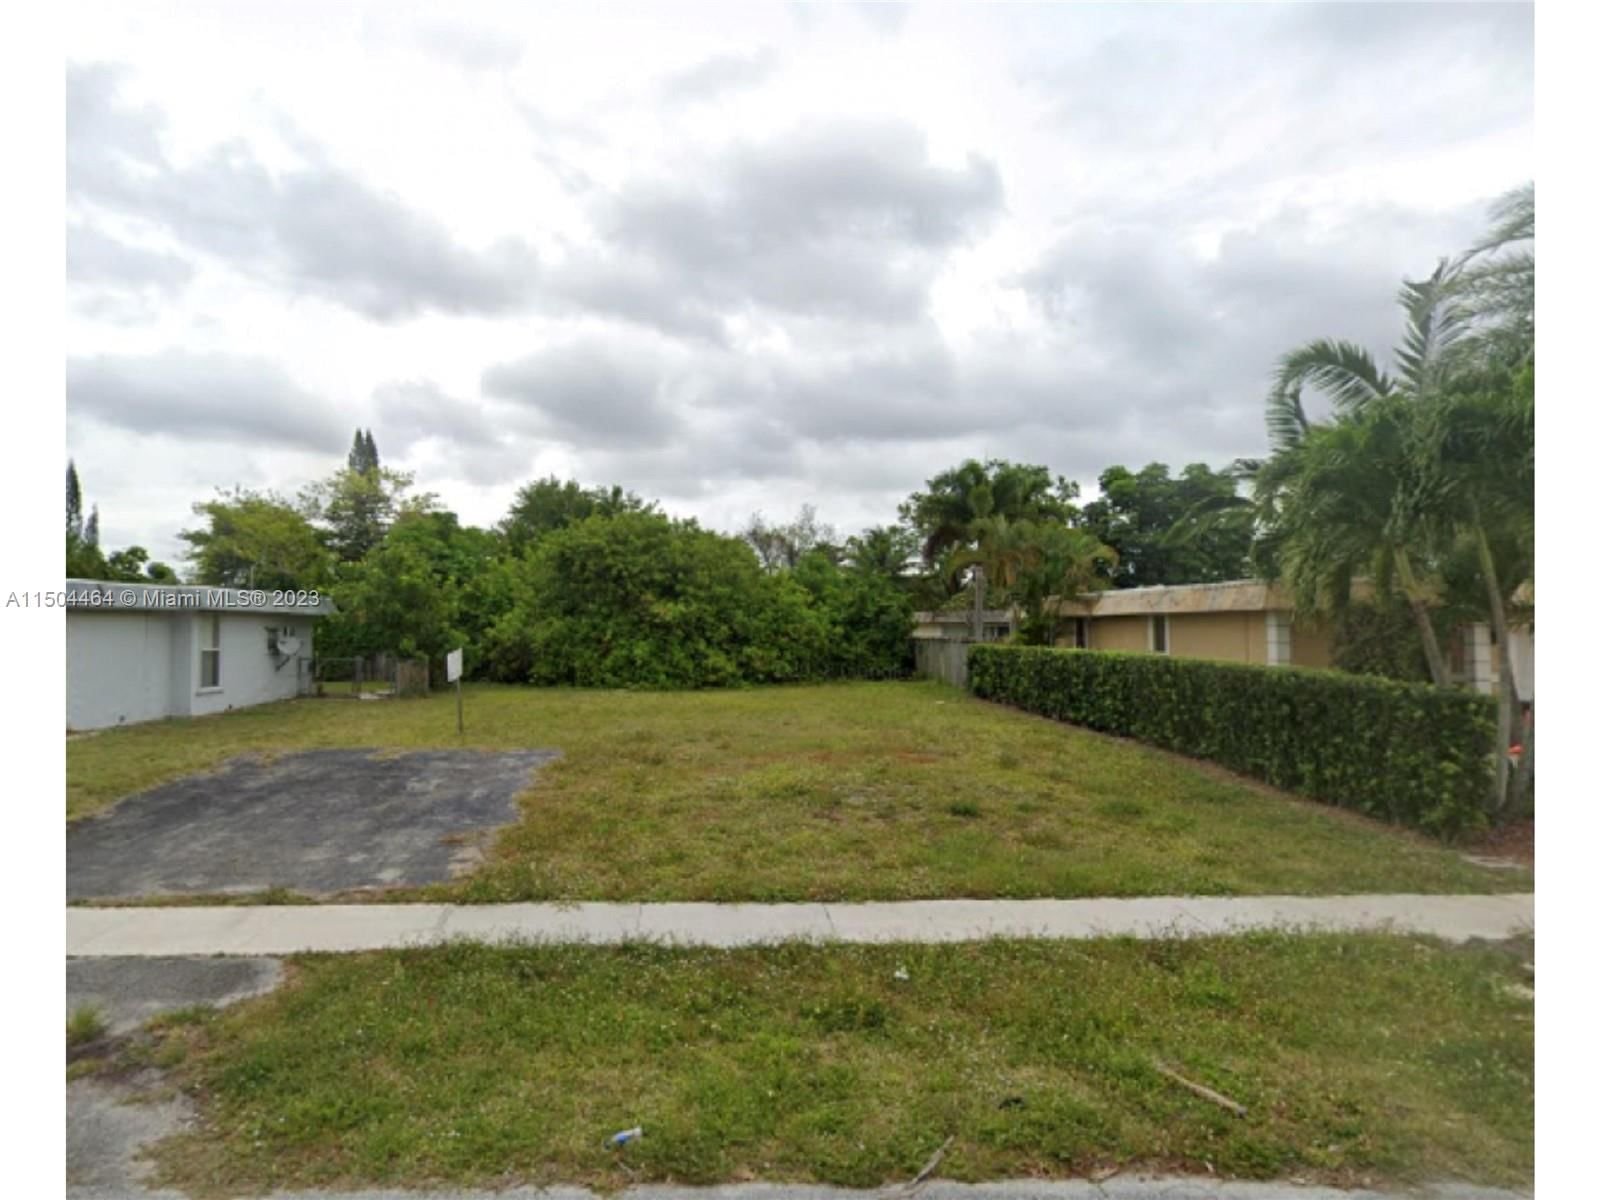 Real estate property located at 7806 68th Ave, Broward County, HEATHGATE 2ND ADD, Tamarac, FL